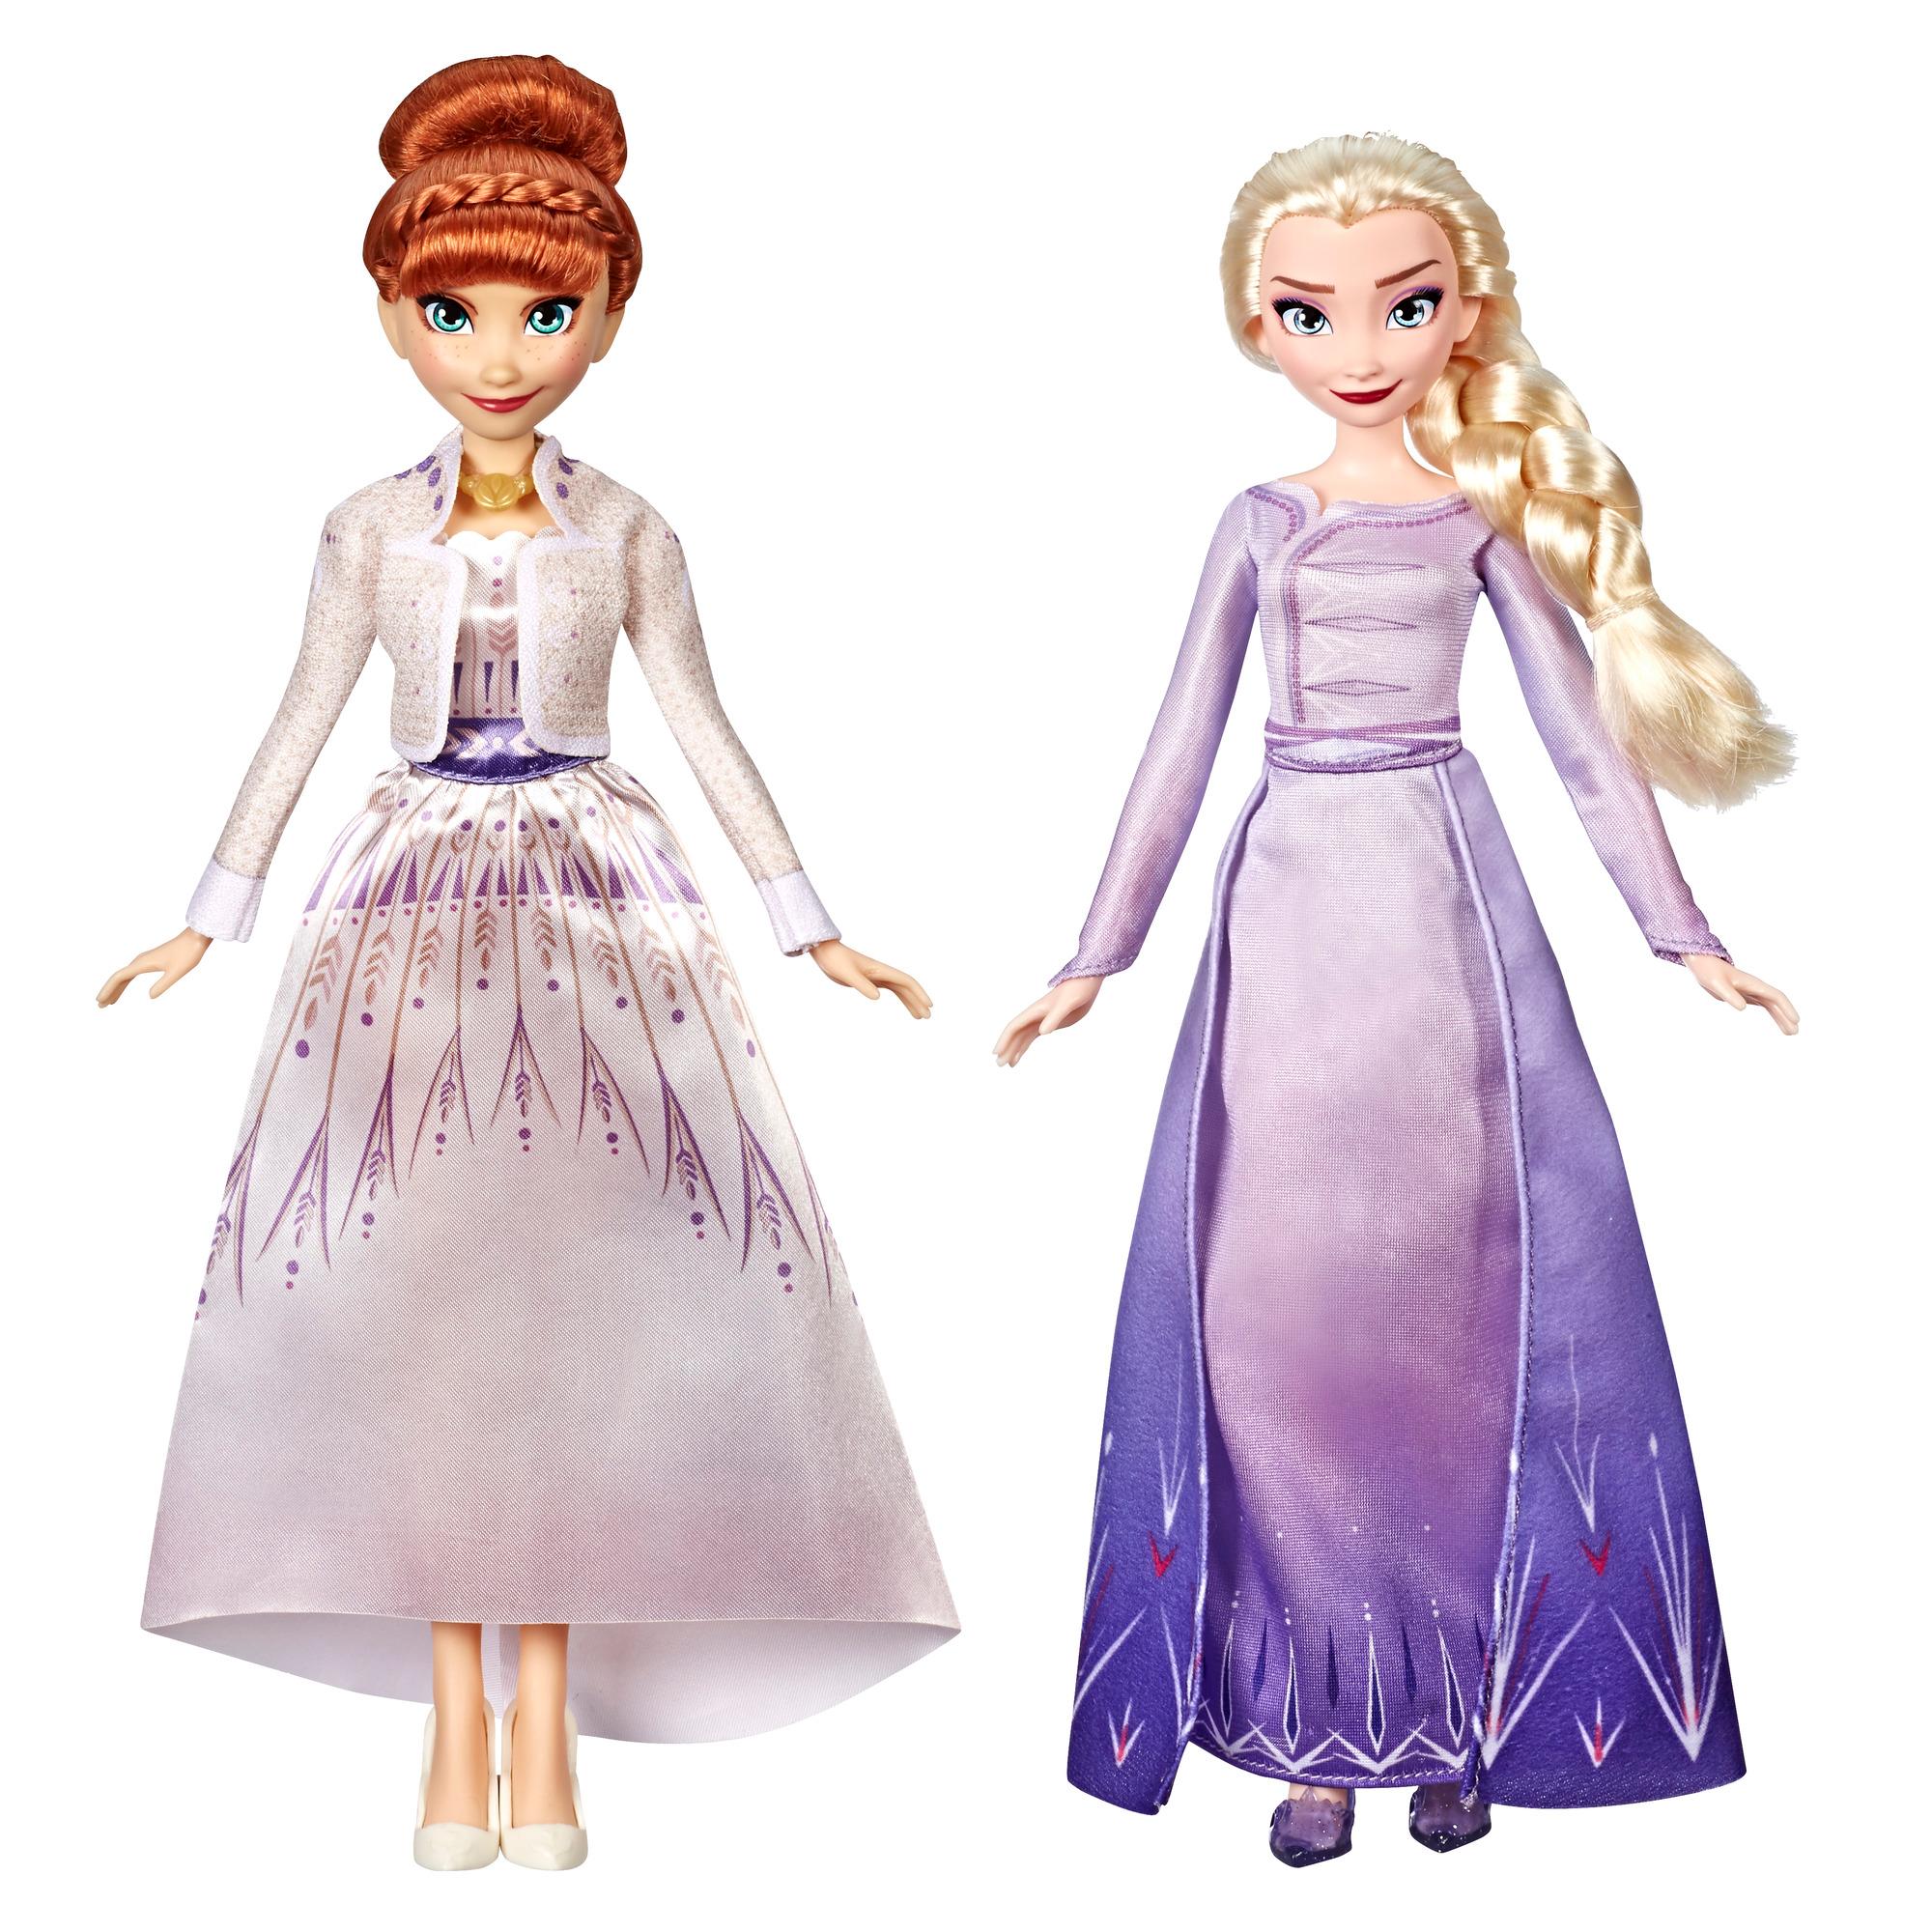 Disney Frozen Elsa and Anna 10" Dolls Set of 2 Hasbro NEW 